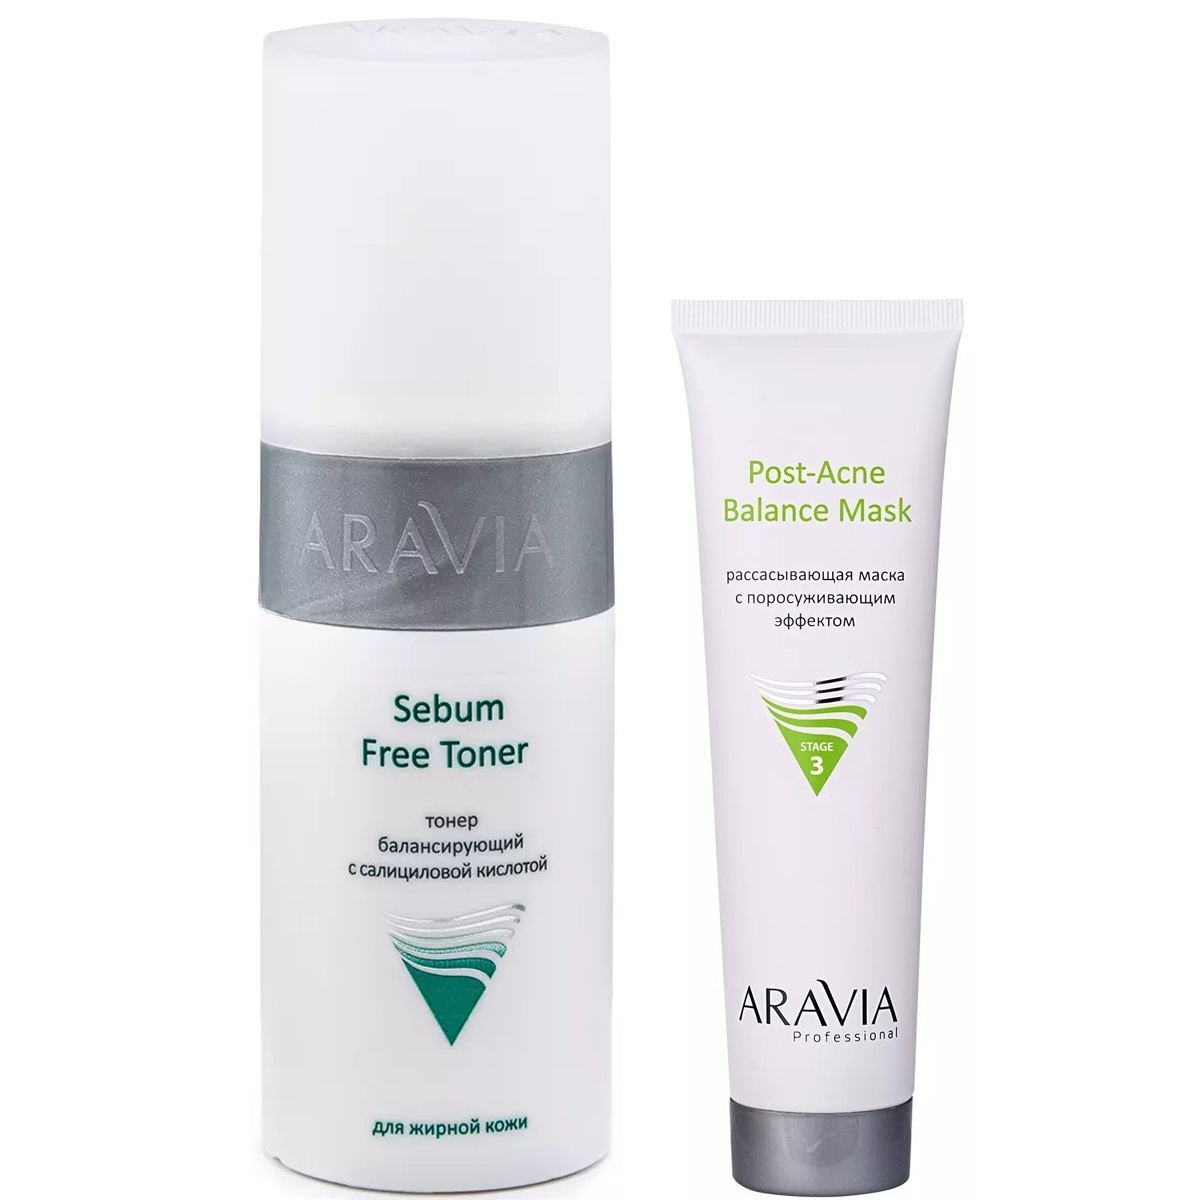 Aravia Professional Набор для проблемной и жирной кожи: маска, 100 мл + тонер, 150 мл (Aravia Professional, Уход за лицом) rere набор косметики для проблемной и жирной кожи